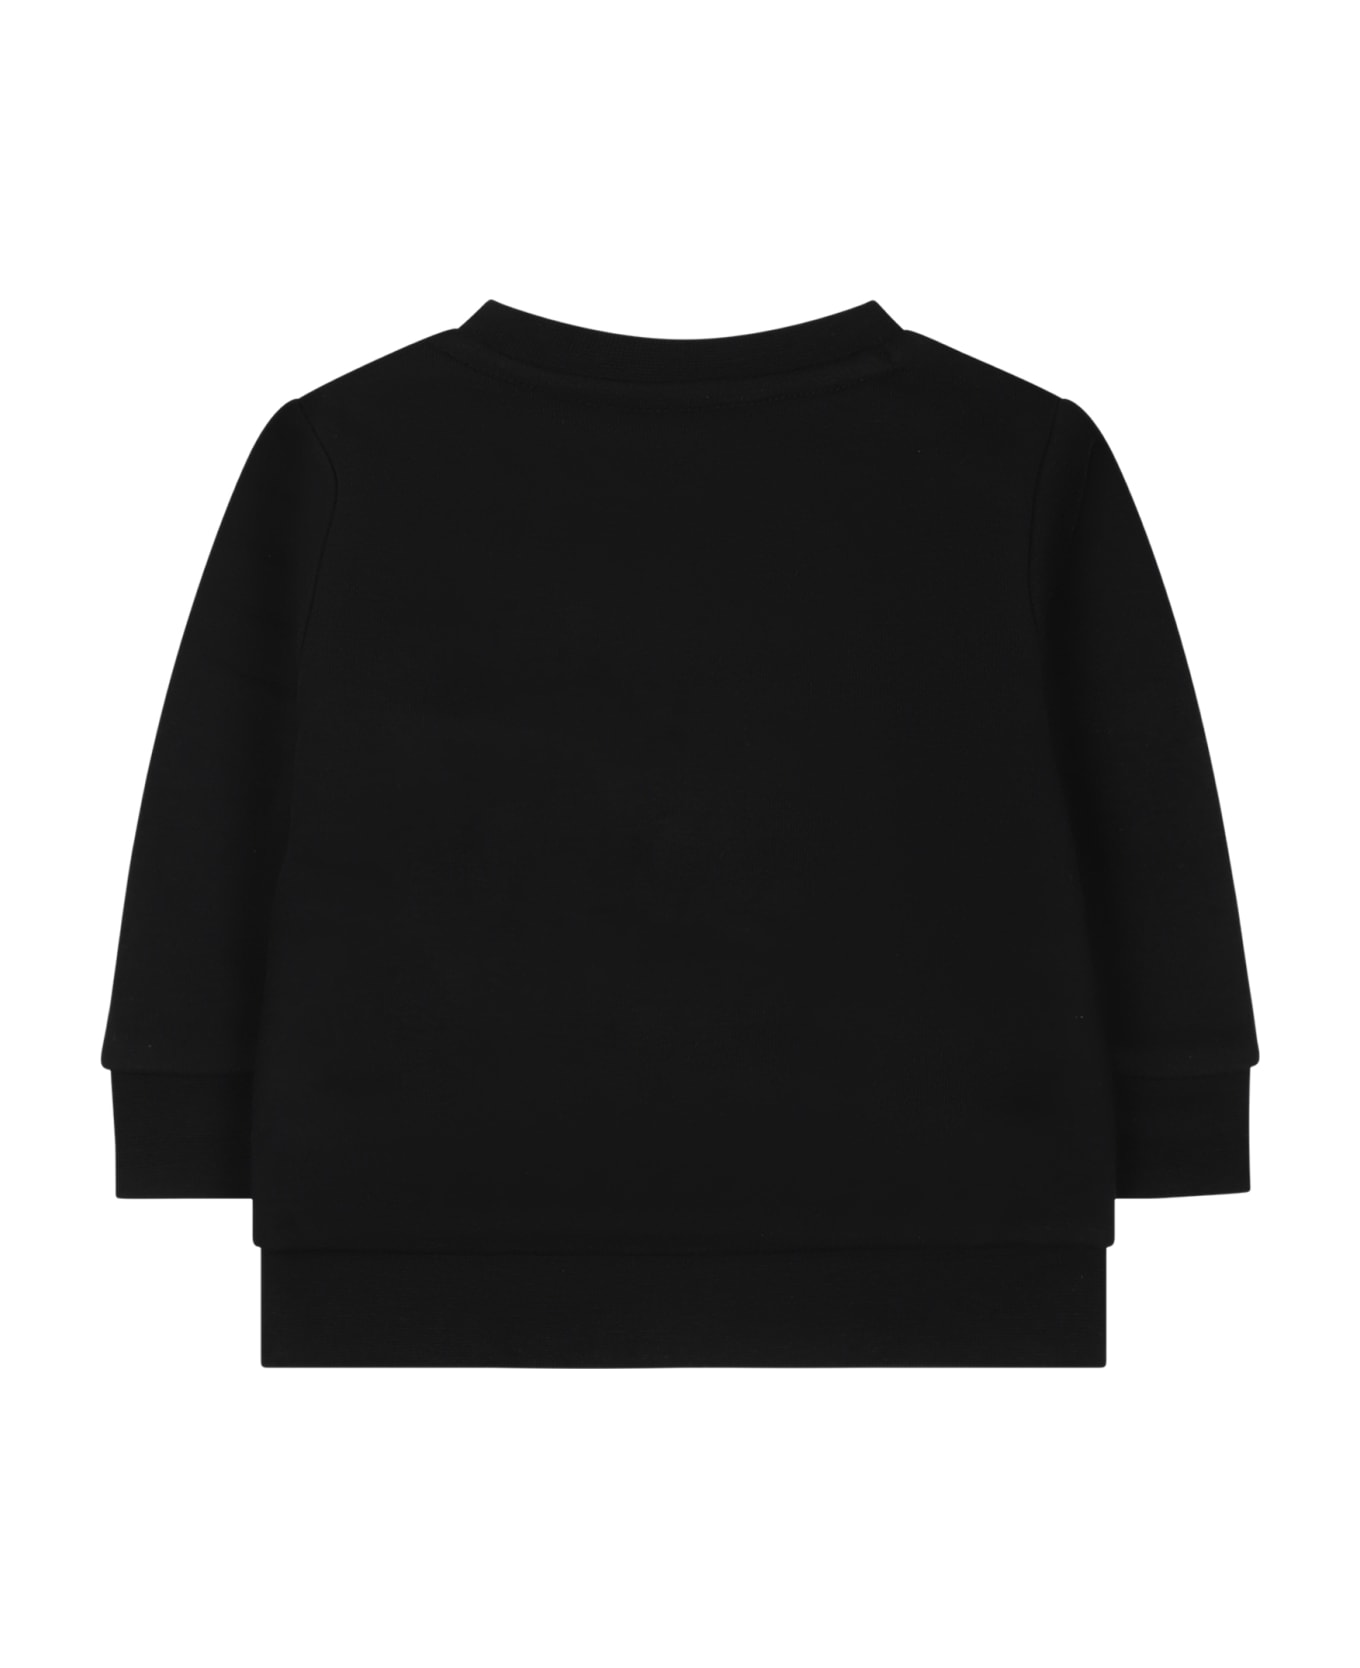 Hugo Boss Black Sweatshirt With Logo For Baby Boy - Black